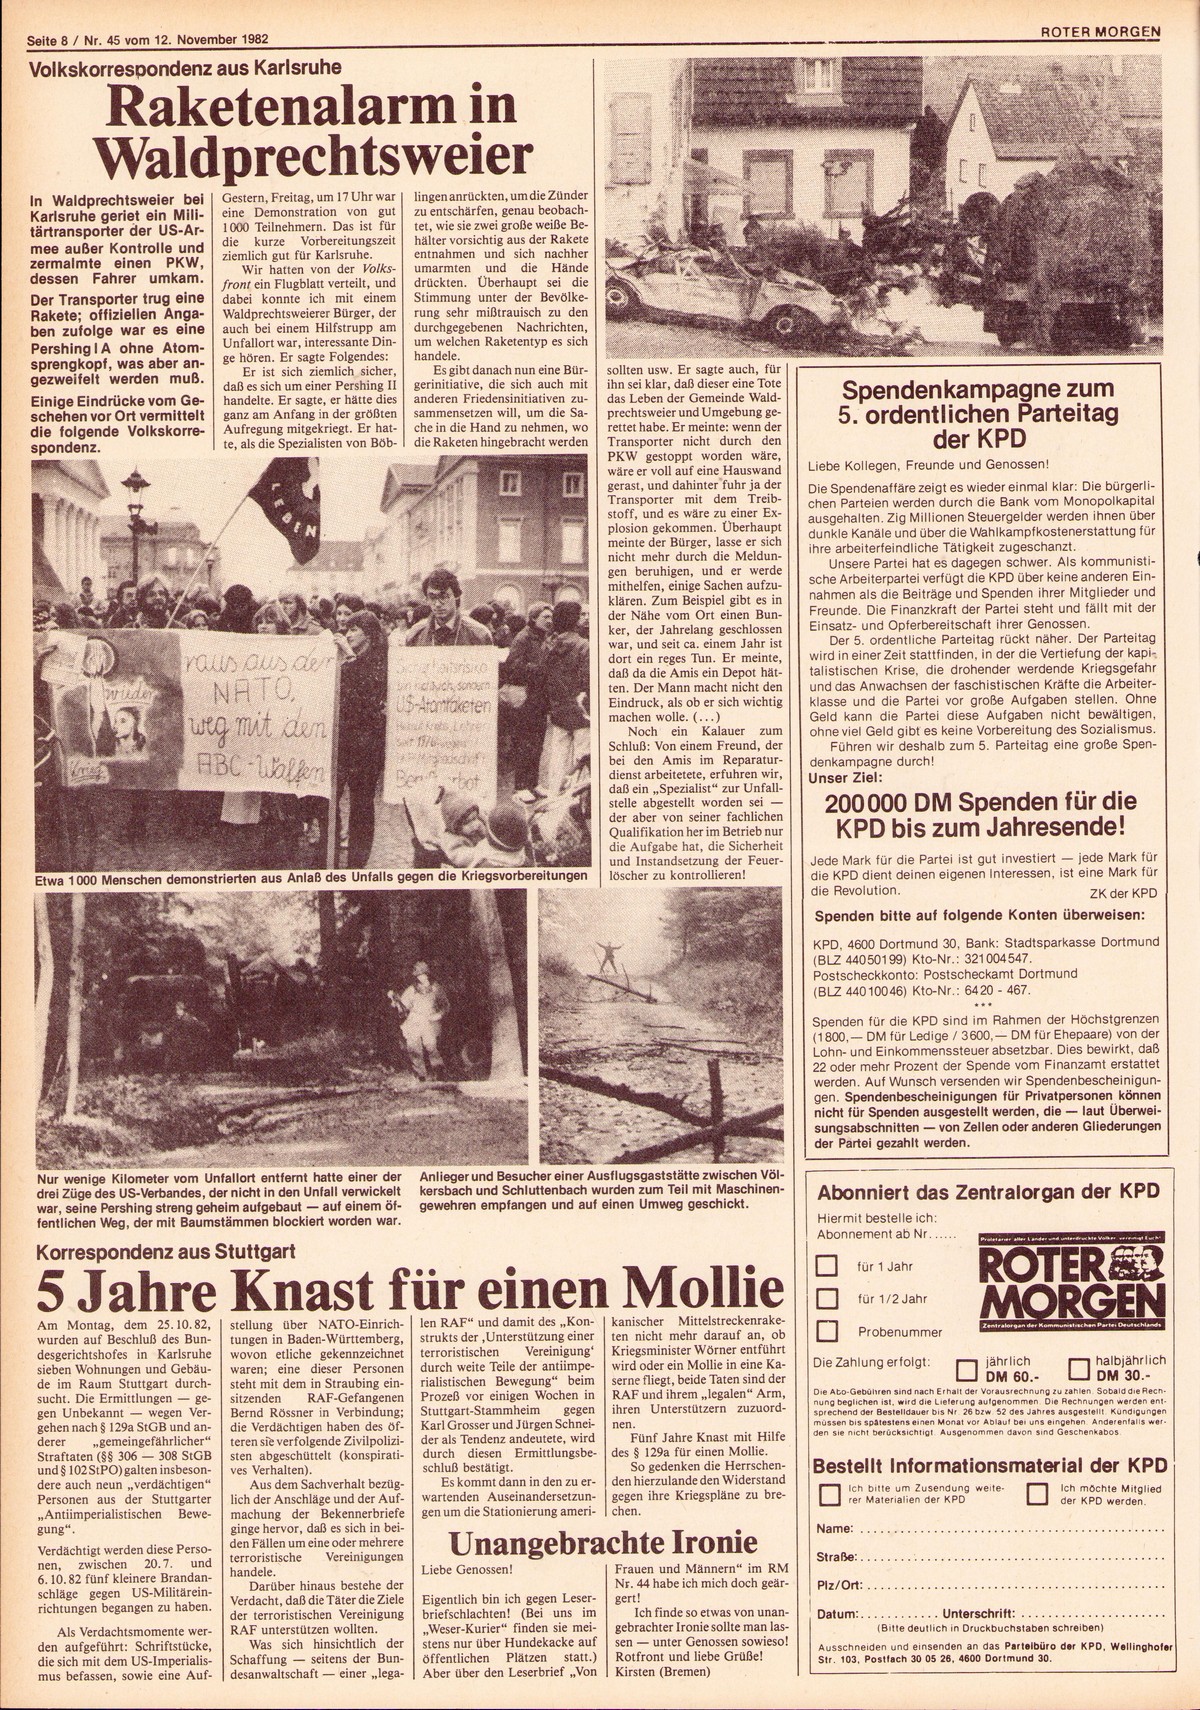 Roter Morgen, 16. Jg., 12. November 1982, Nr. 45, Seite 8